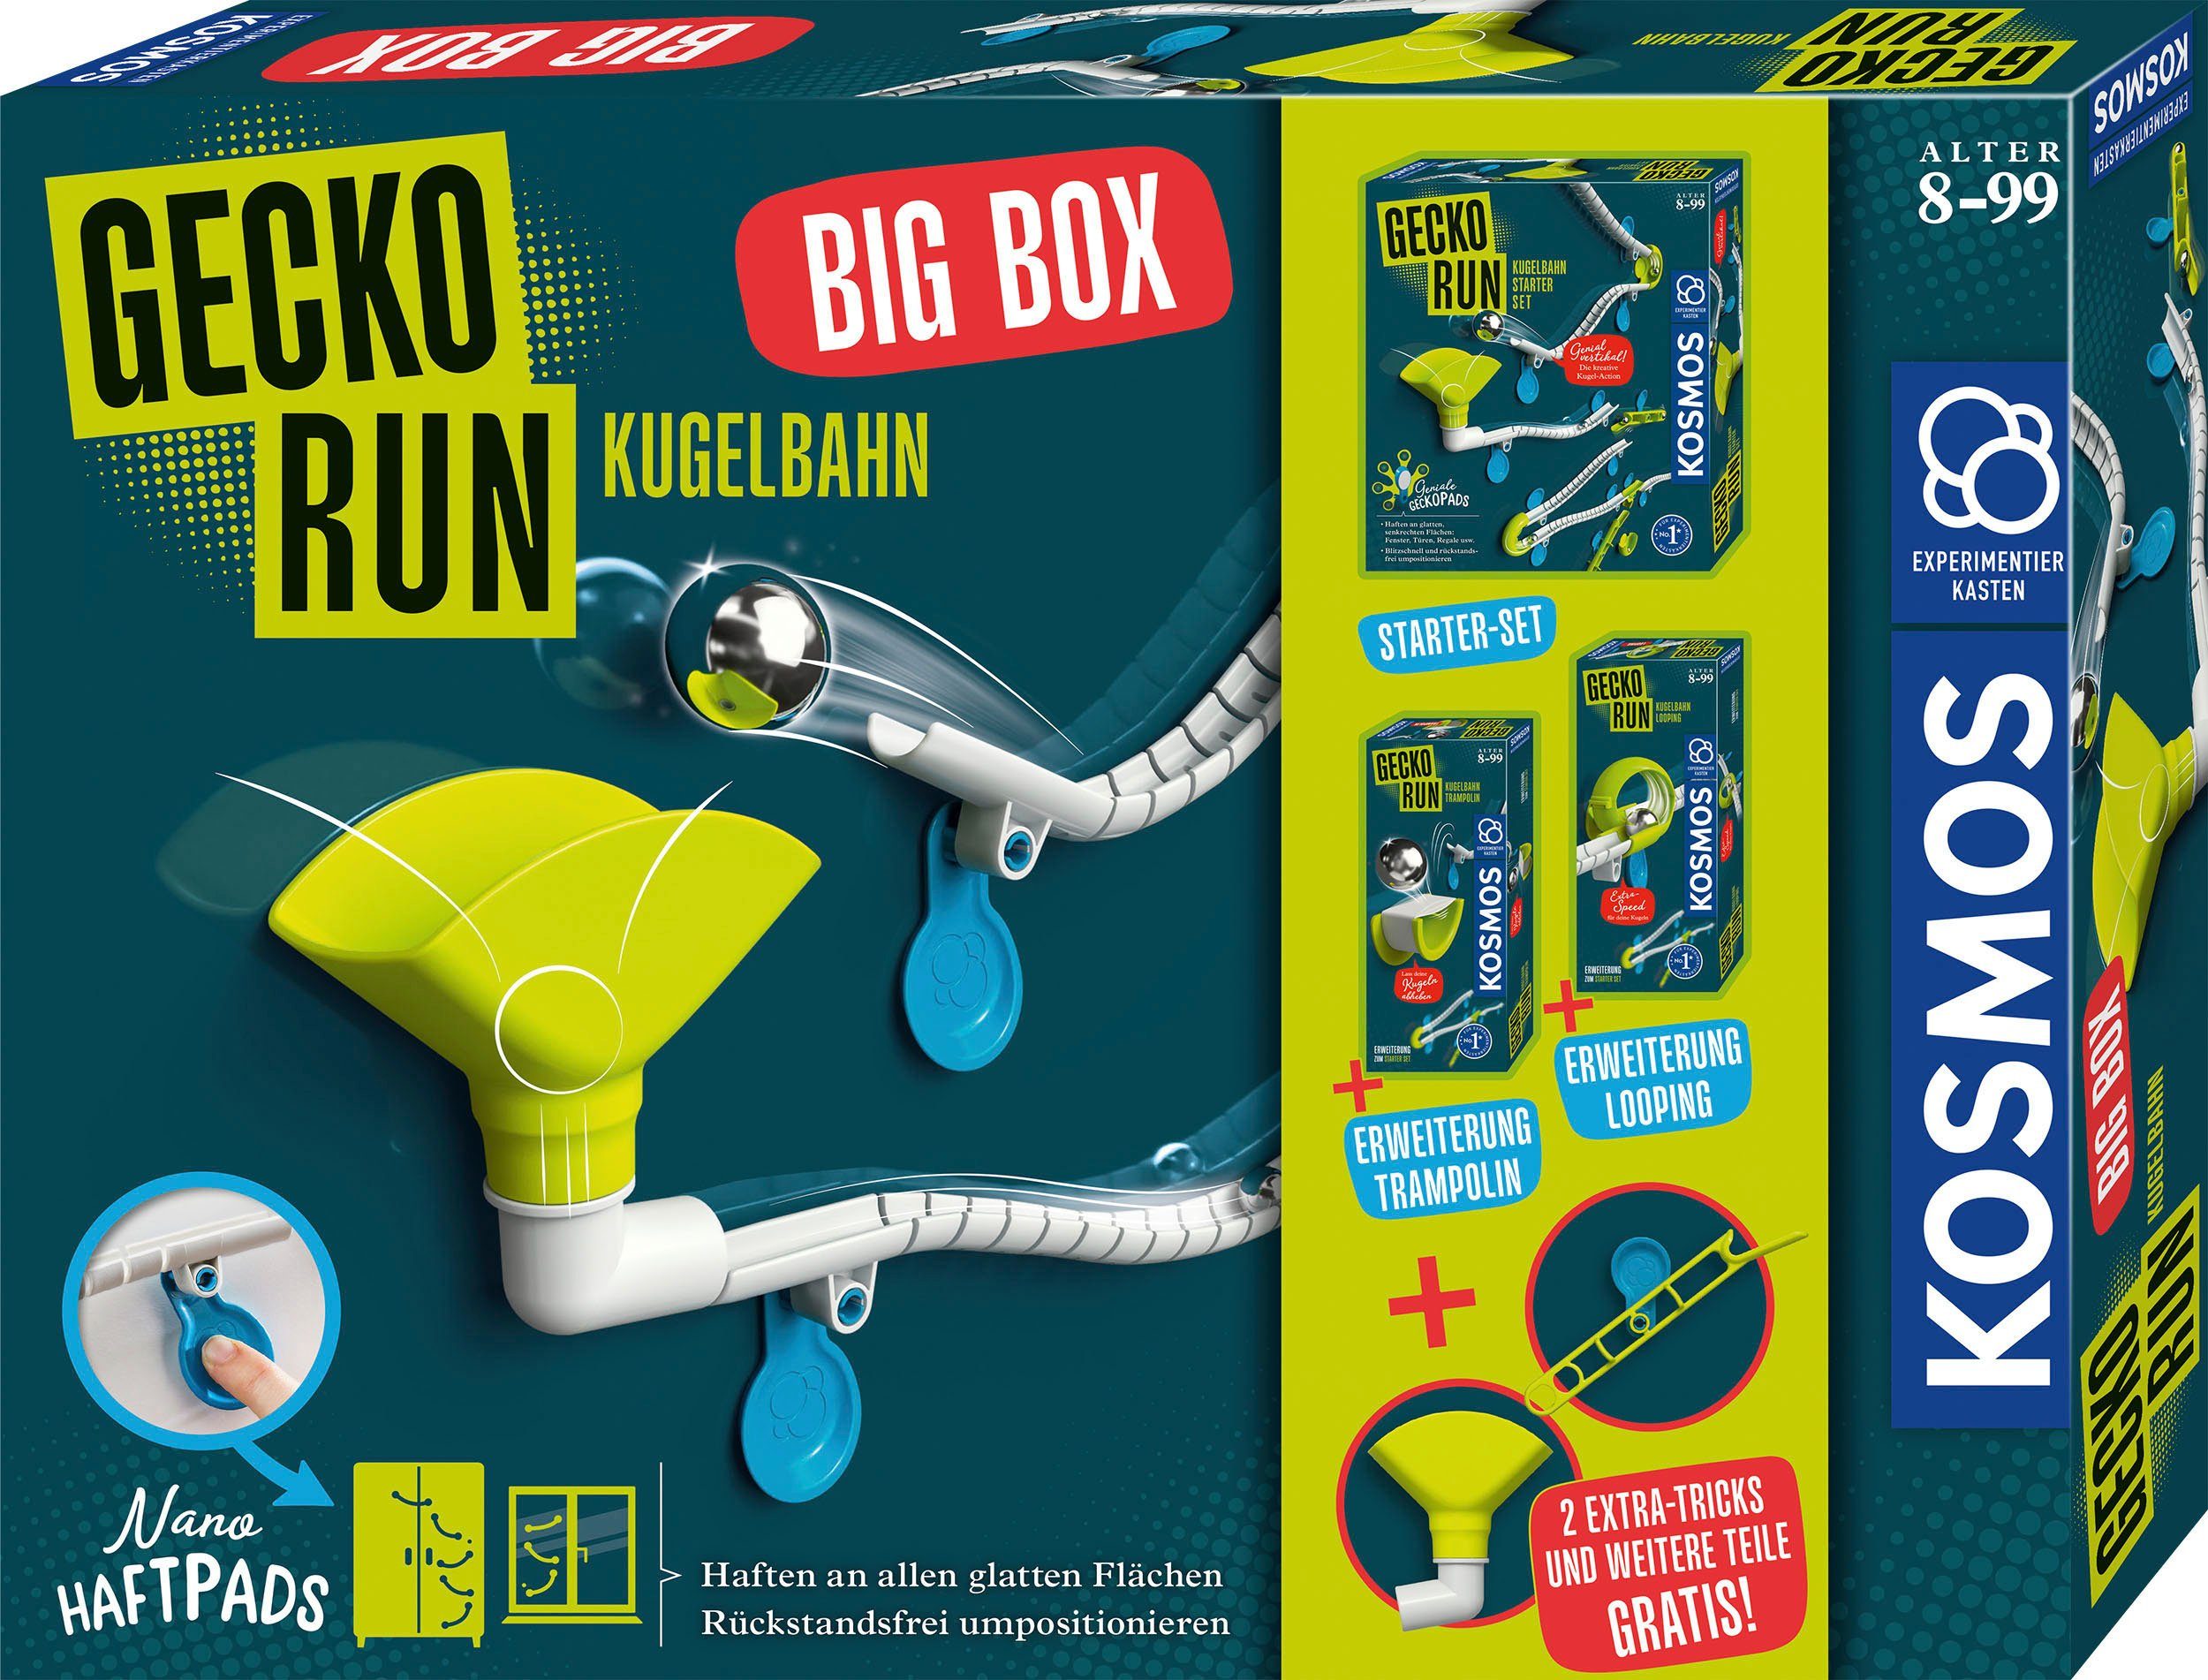 Kosmos Kugelbahn Gecko Run - Big Box